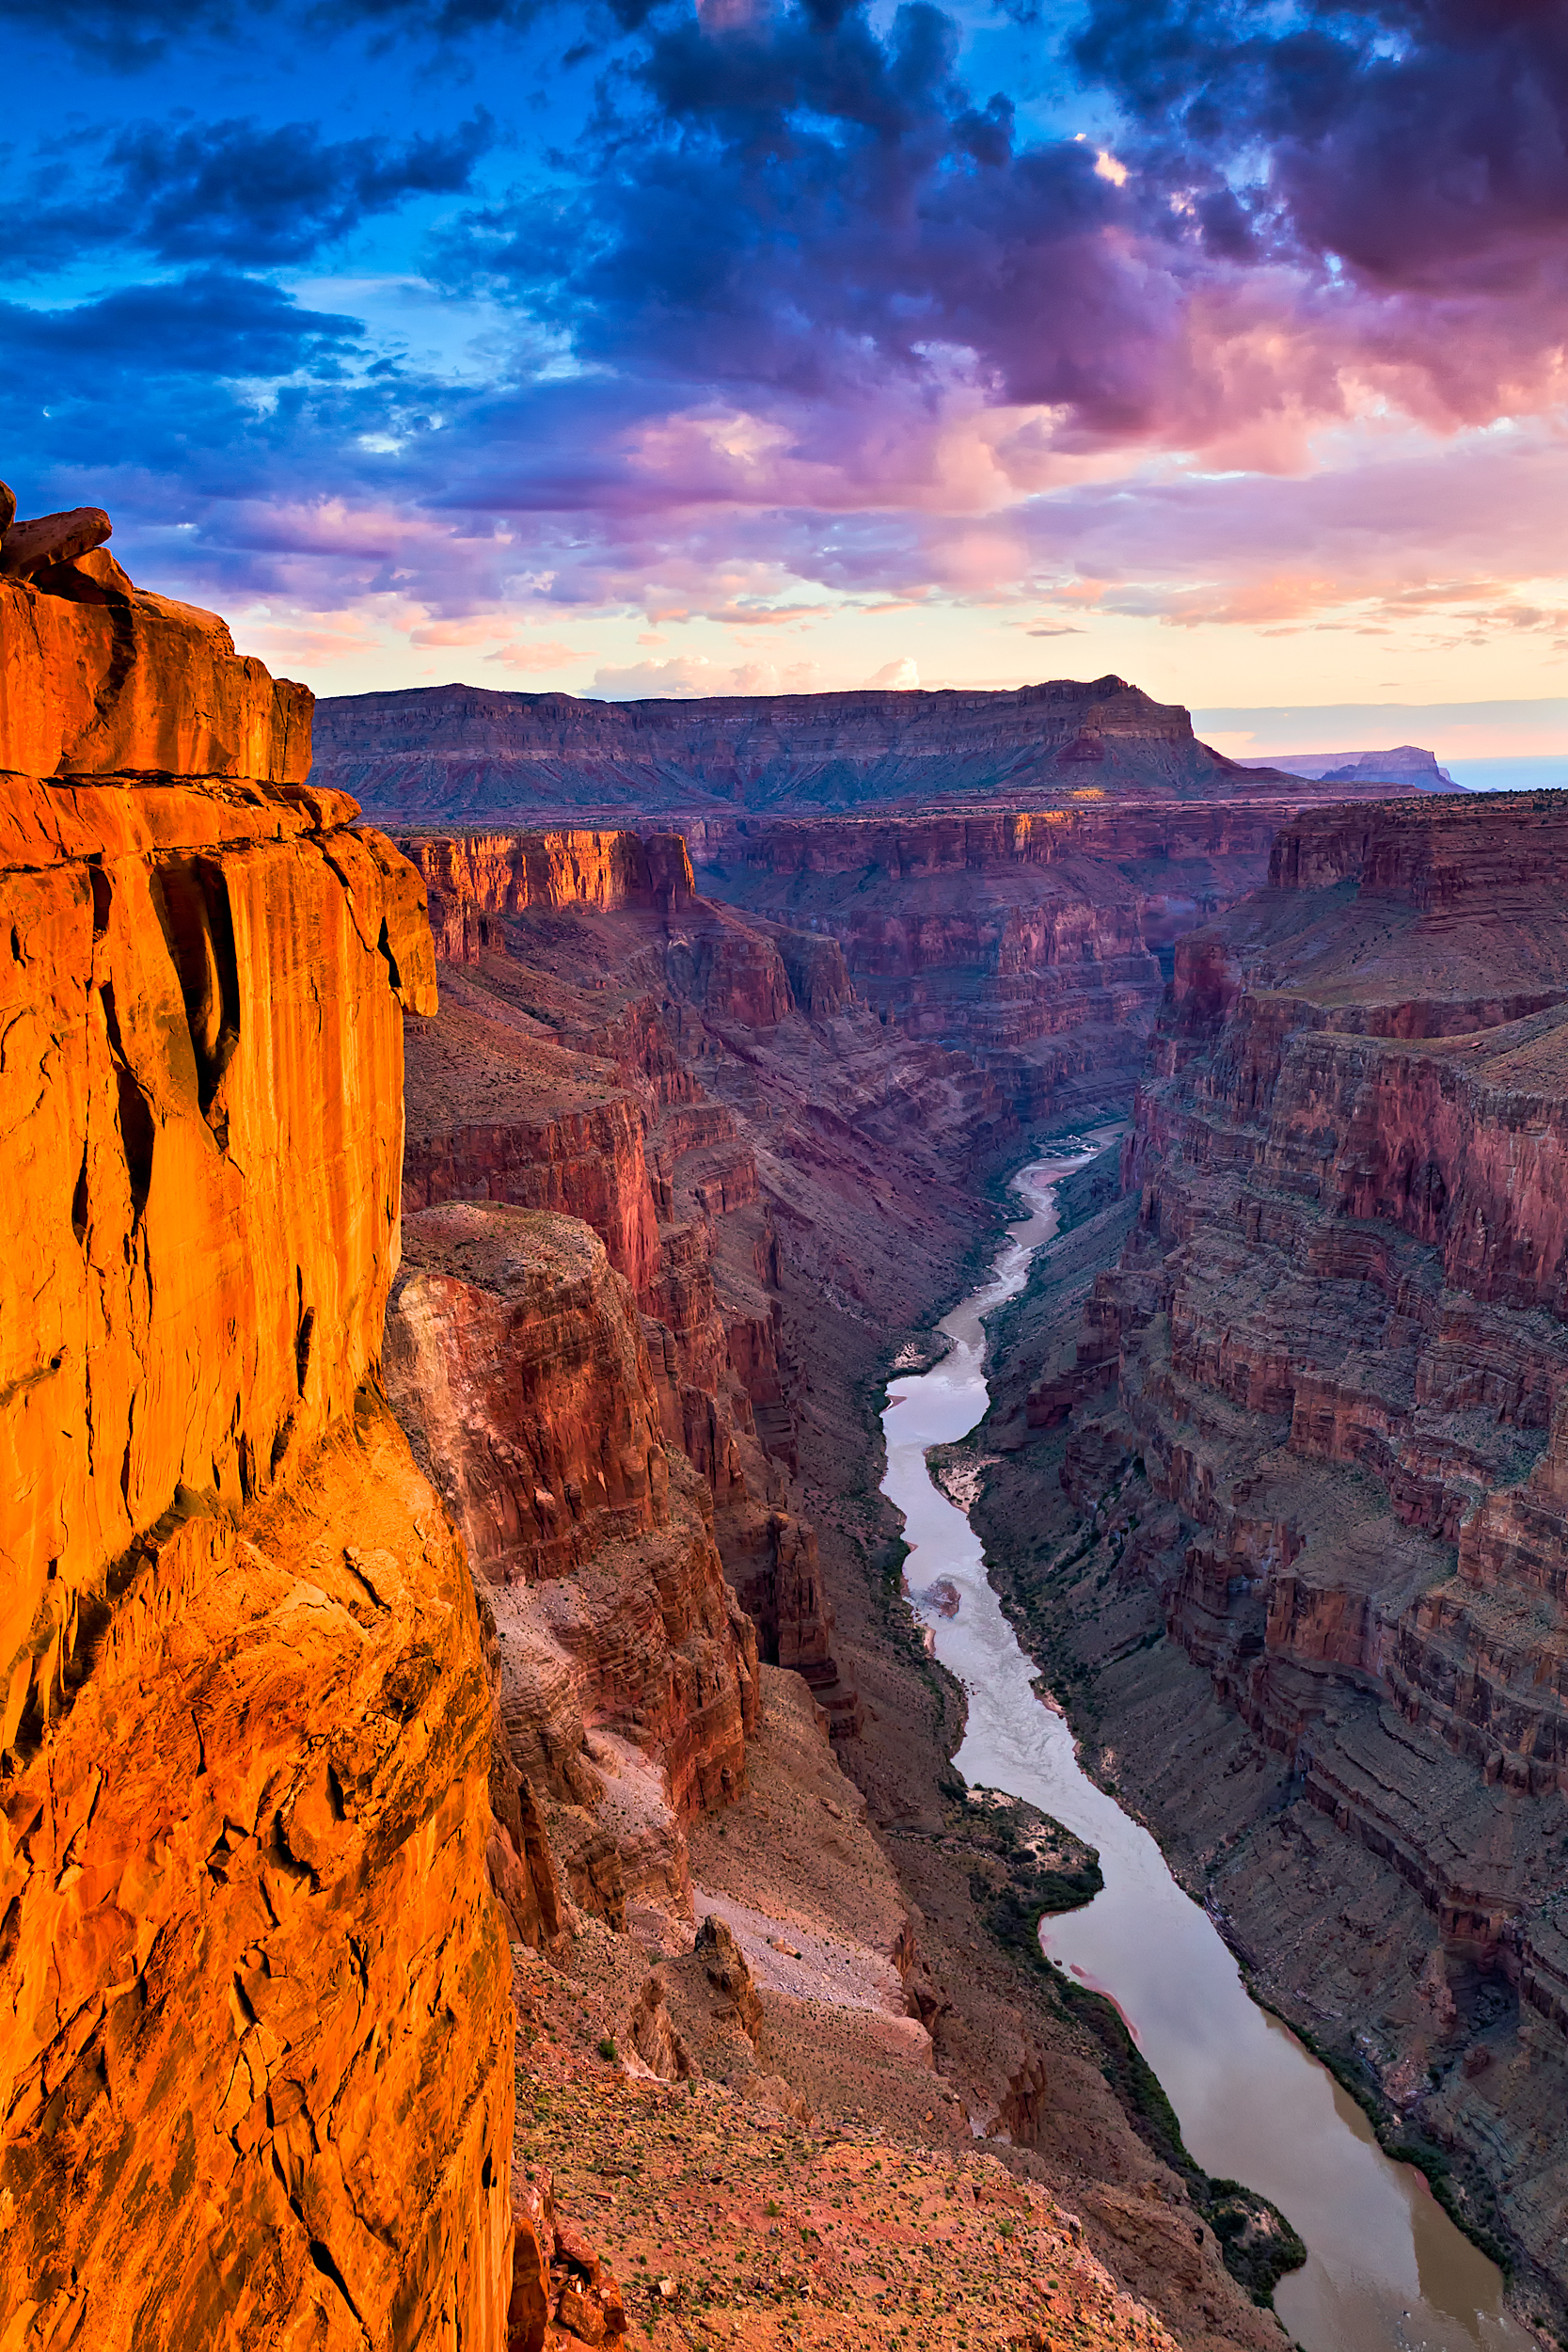 Destination image of Grand Canyon